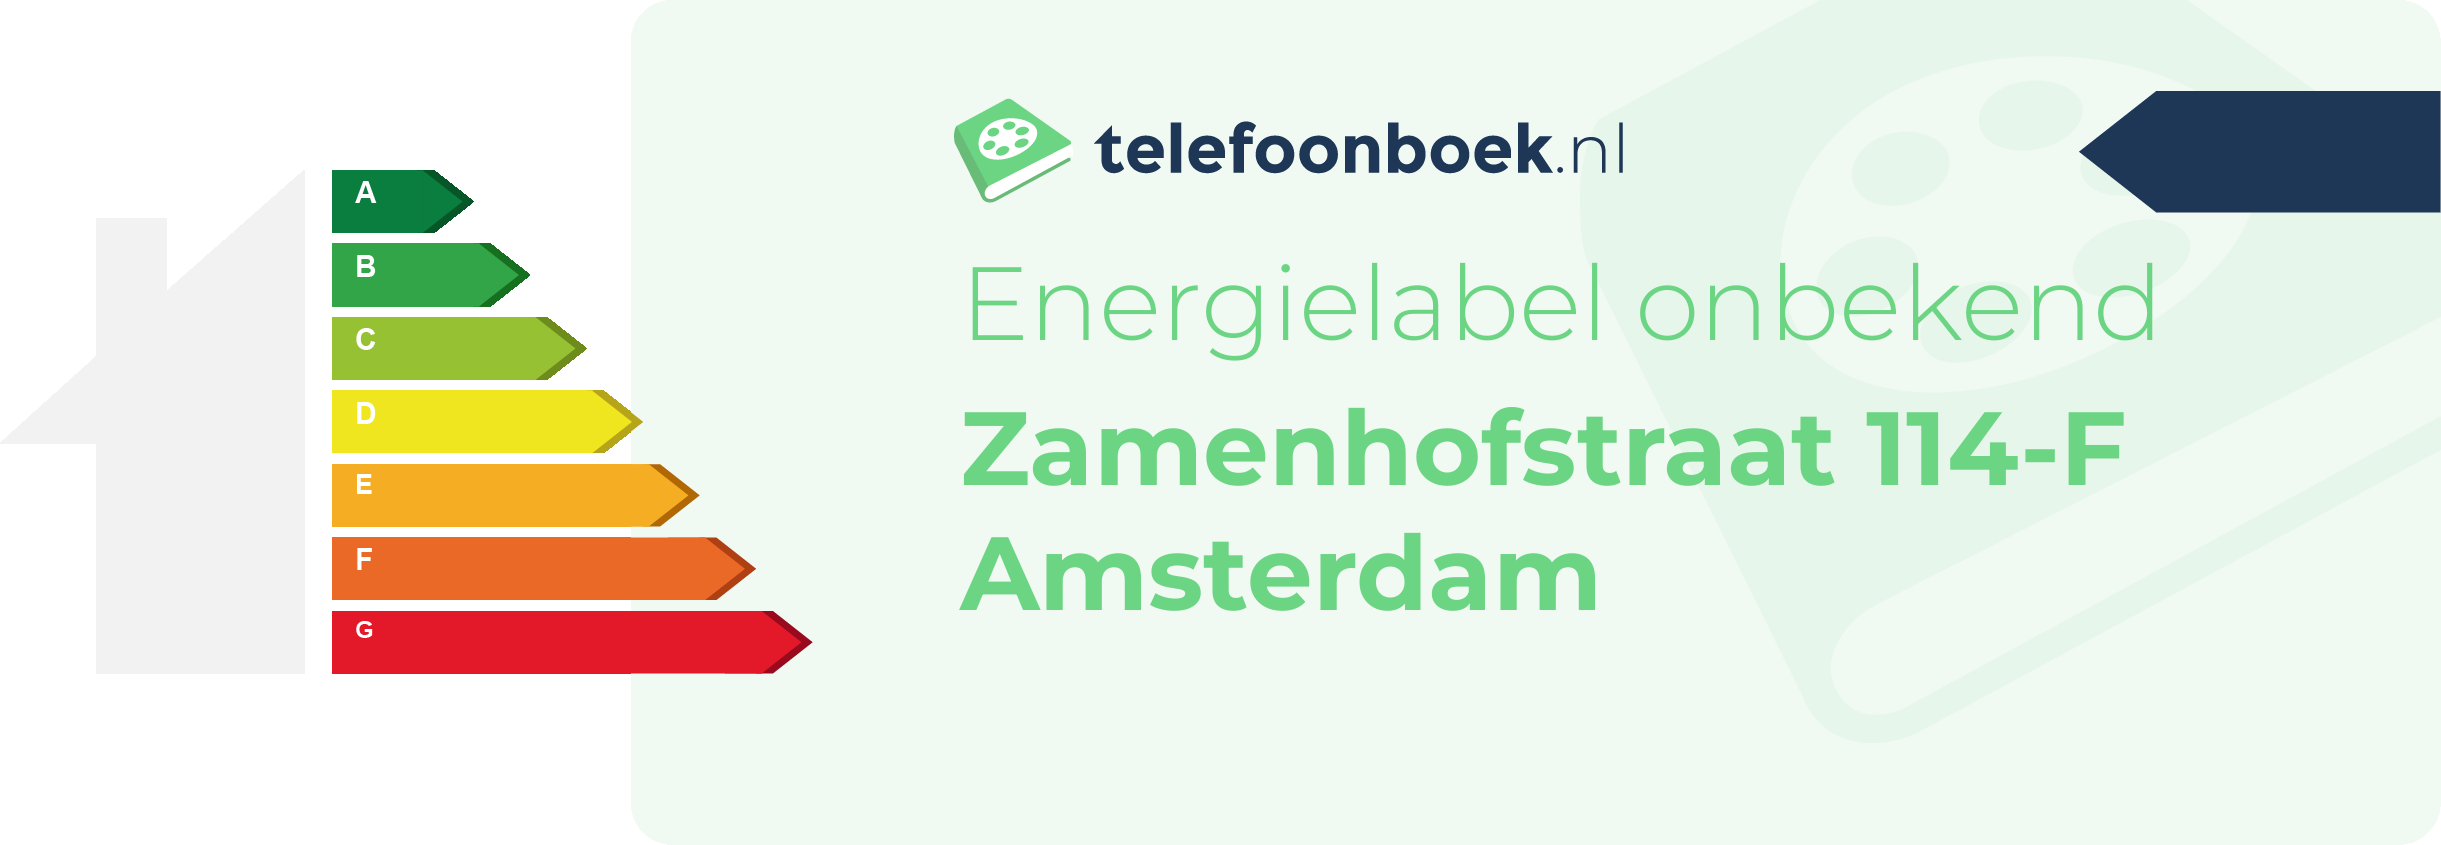 Energielabel Zamenhofstraat 114-F Amsterdam